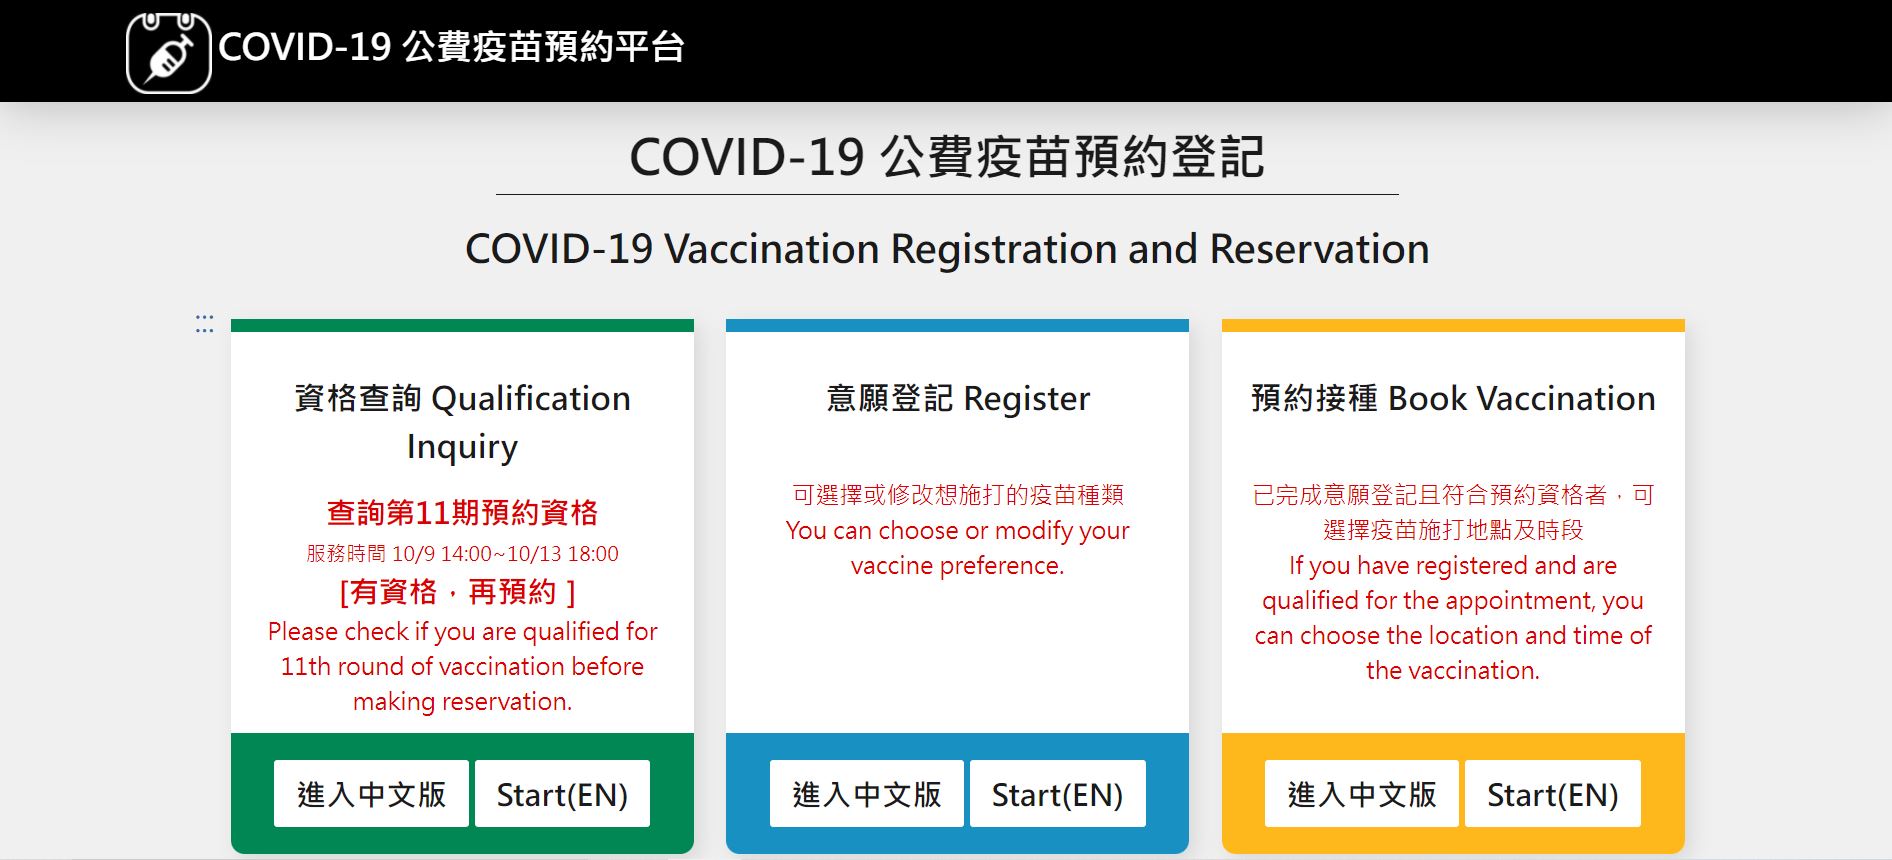 Vaccination registration platform "qualification inquiry" is open. (Photo / Retrieved from COVID-19 registration platform)